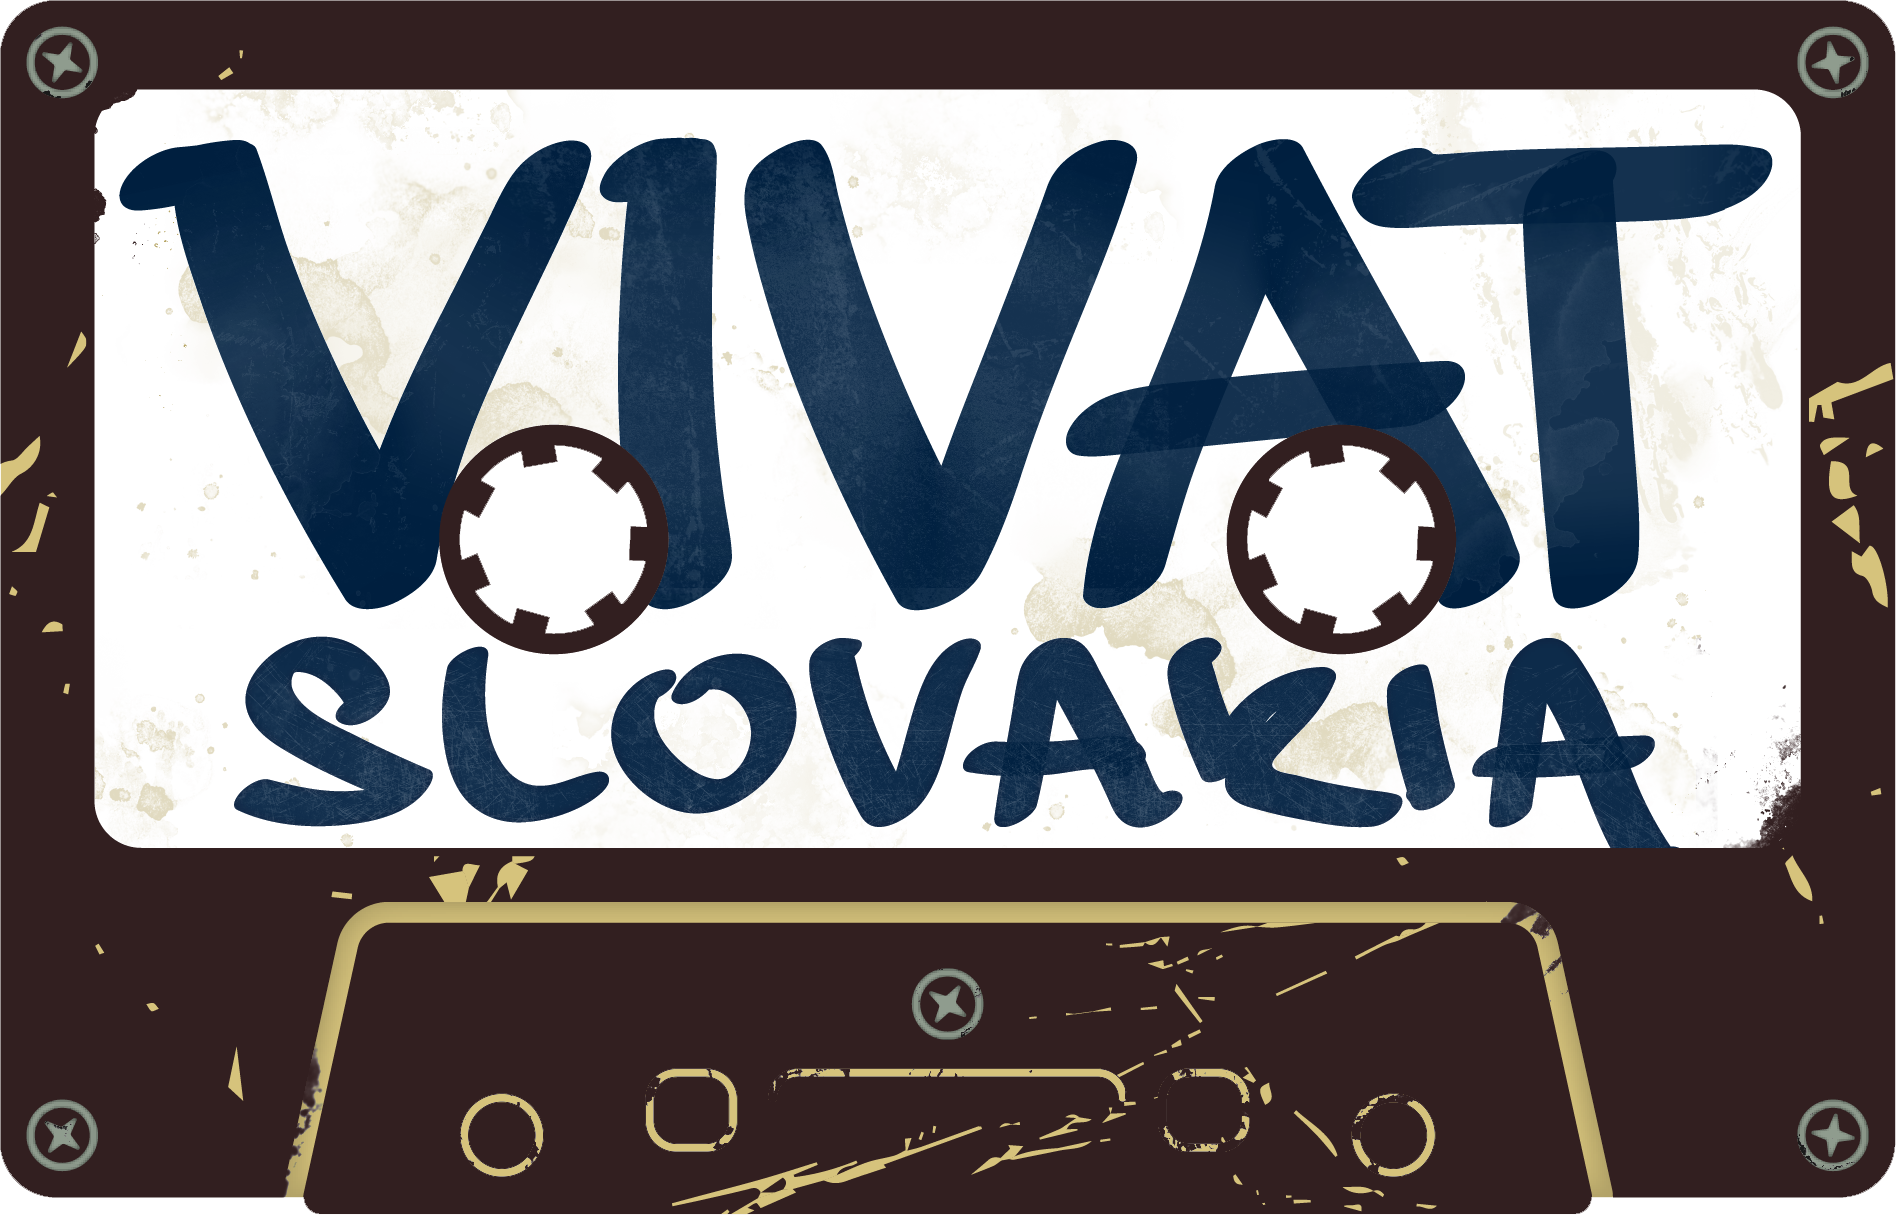 Vivat Slovakia